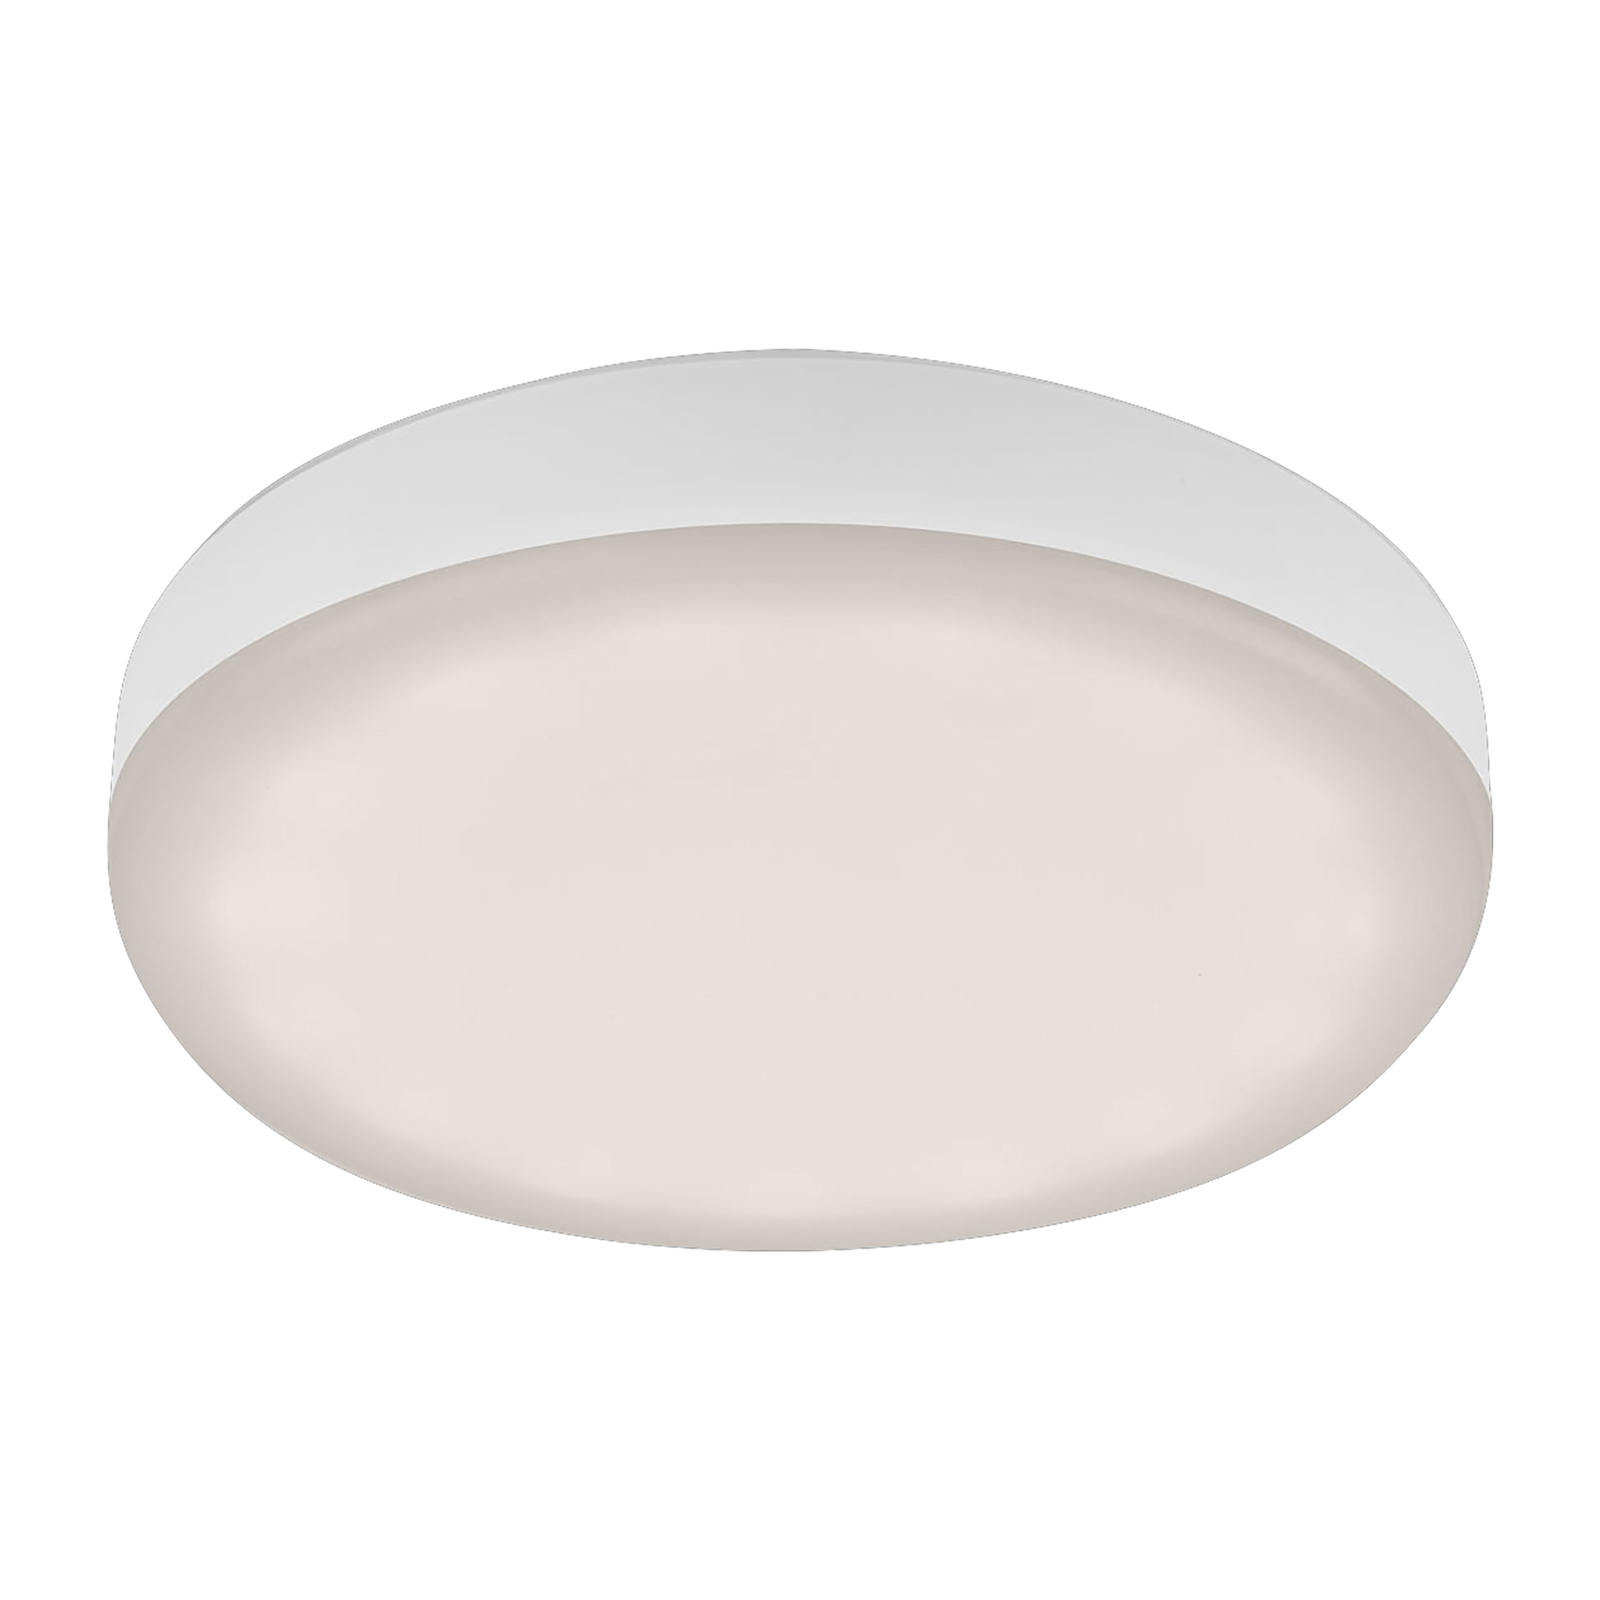 Faretto LED incasso Plat, bianco, Ø 7,5 cm, 4.000K